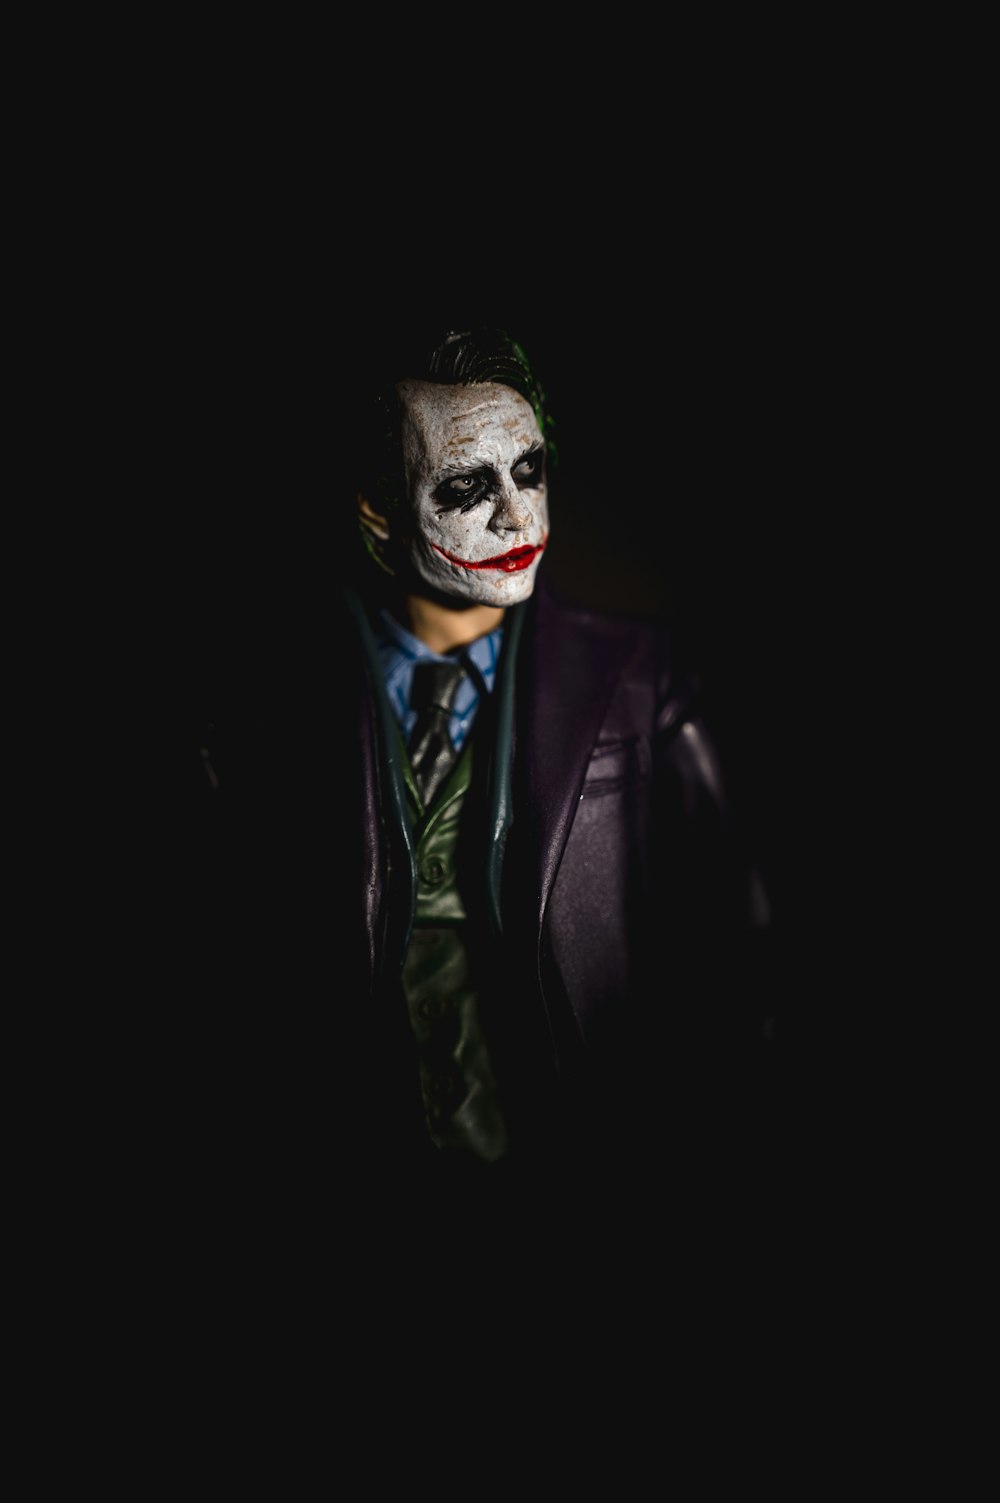 Top 999+ joker face images – Amazing Collection joker face images Full 4K